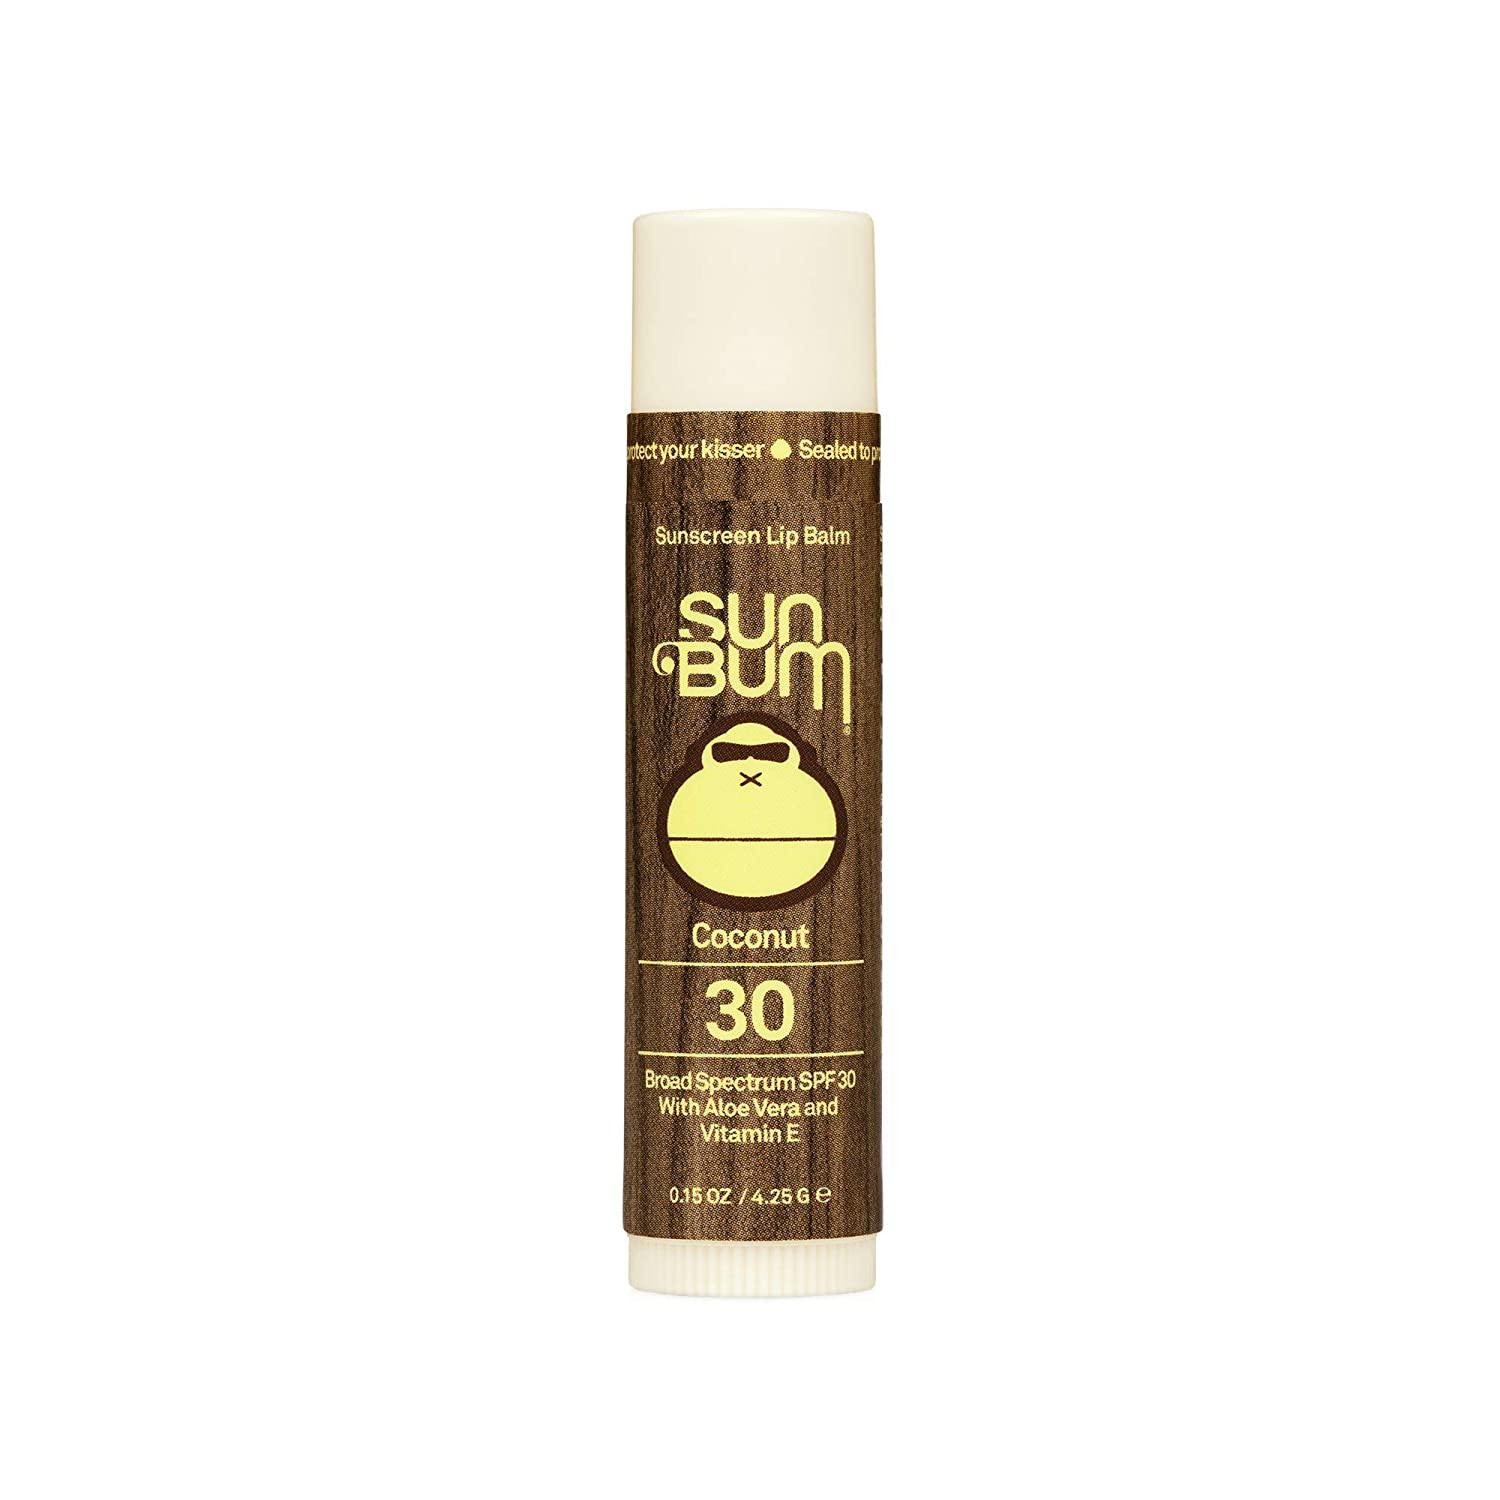 Sun Bum SPF 30 Sunscreen Lip Balm | Vegan and Cruelty Free Broad Spectrum UVA/UVB Lip Care with Aloe and Vitamin E for Moisturized Lips | Variety Pack |.15 Oz